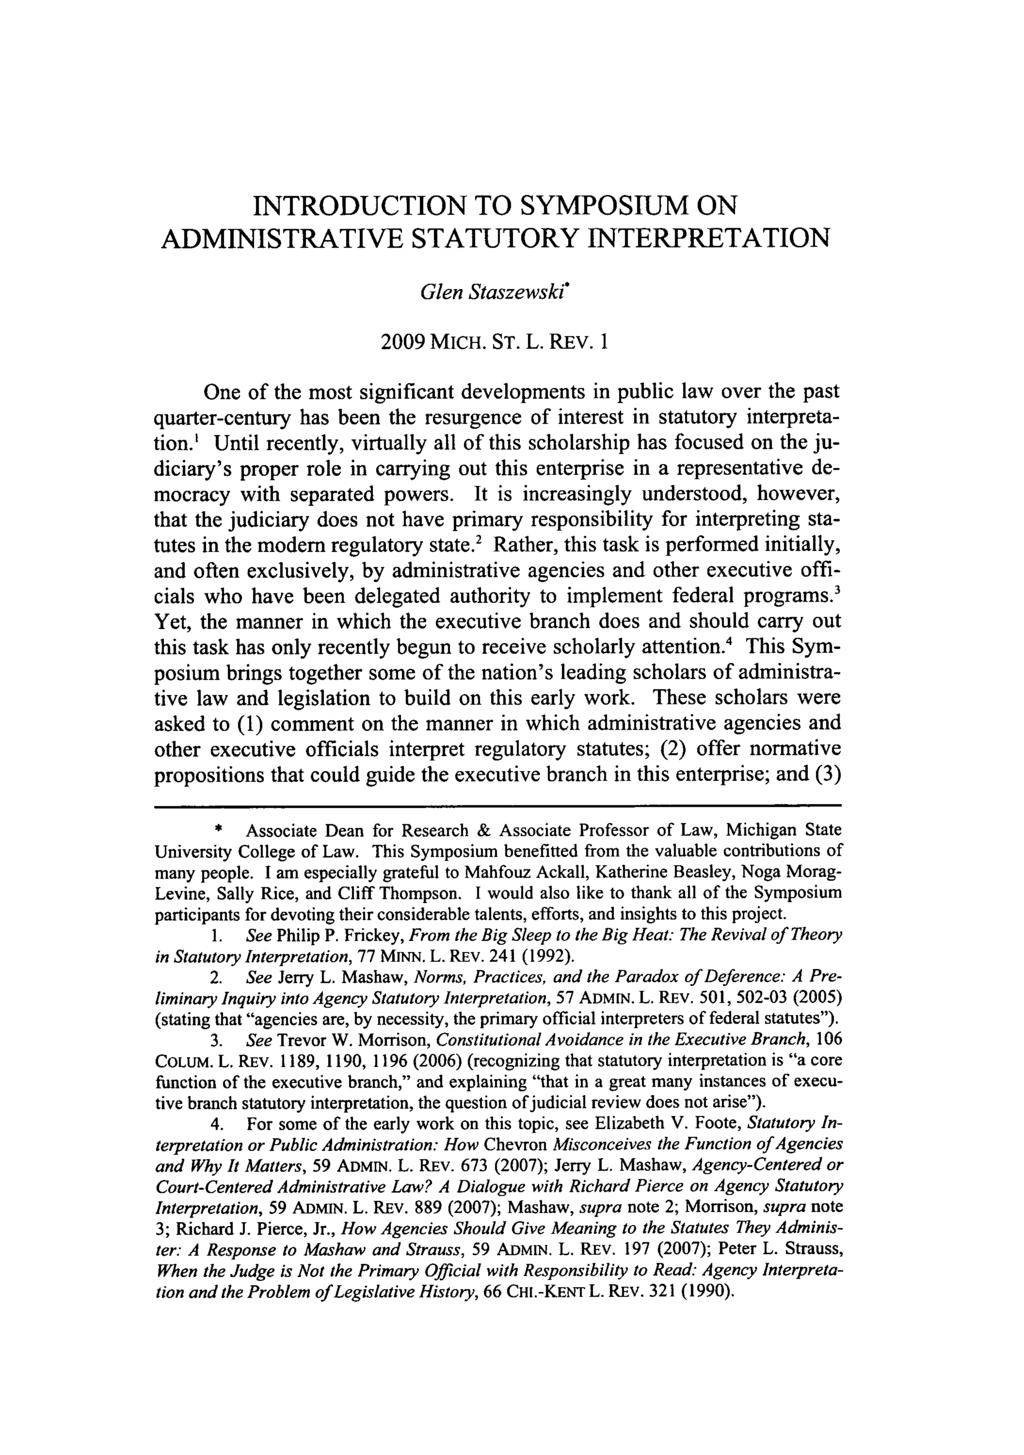 INTRODUCTION TO SYMPOSIUM ON ADMINISTRATIVE STATUTORY INTERPRETATION Glen Staszewski' 2009 MICH. ST. L. REv.